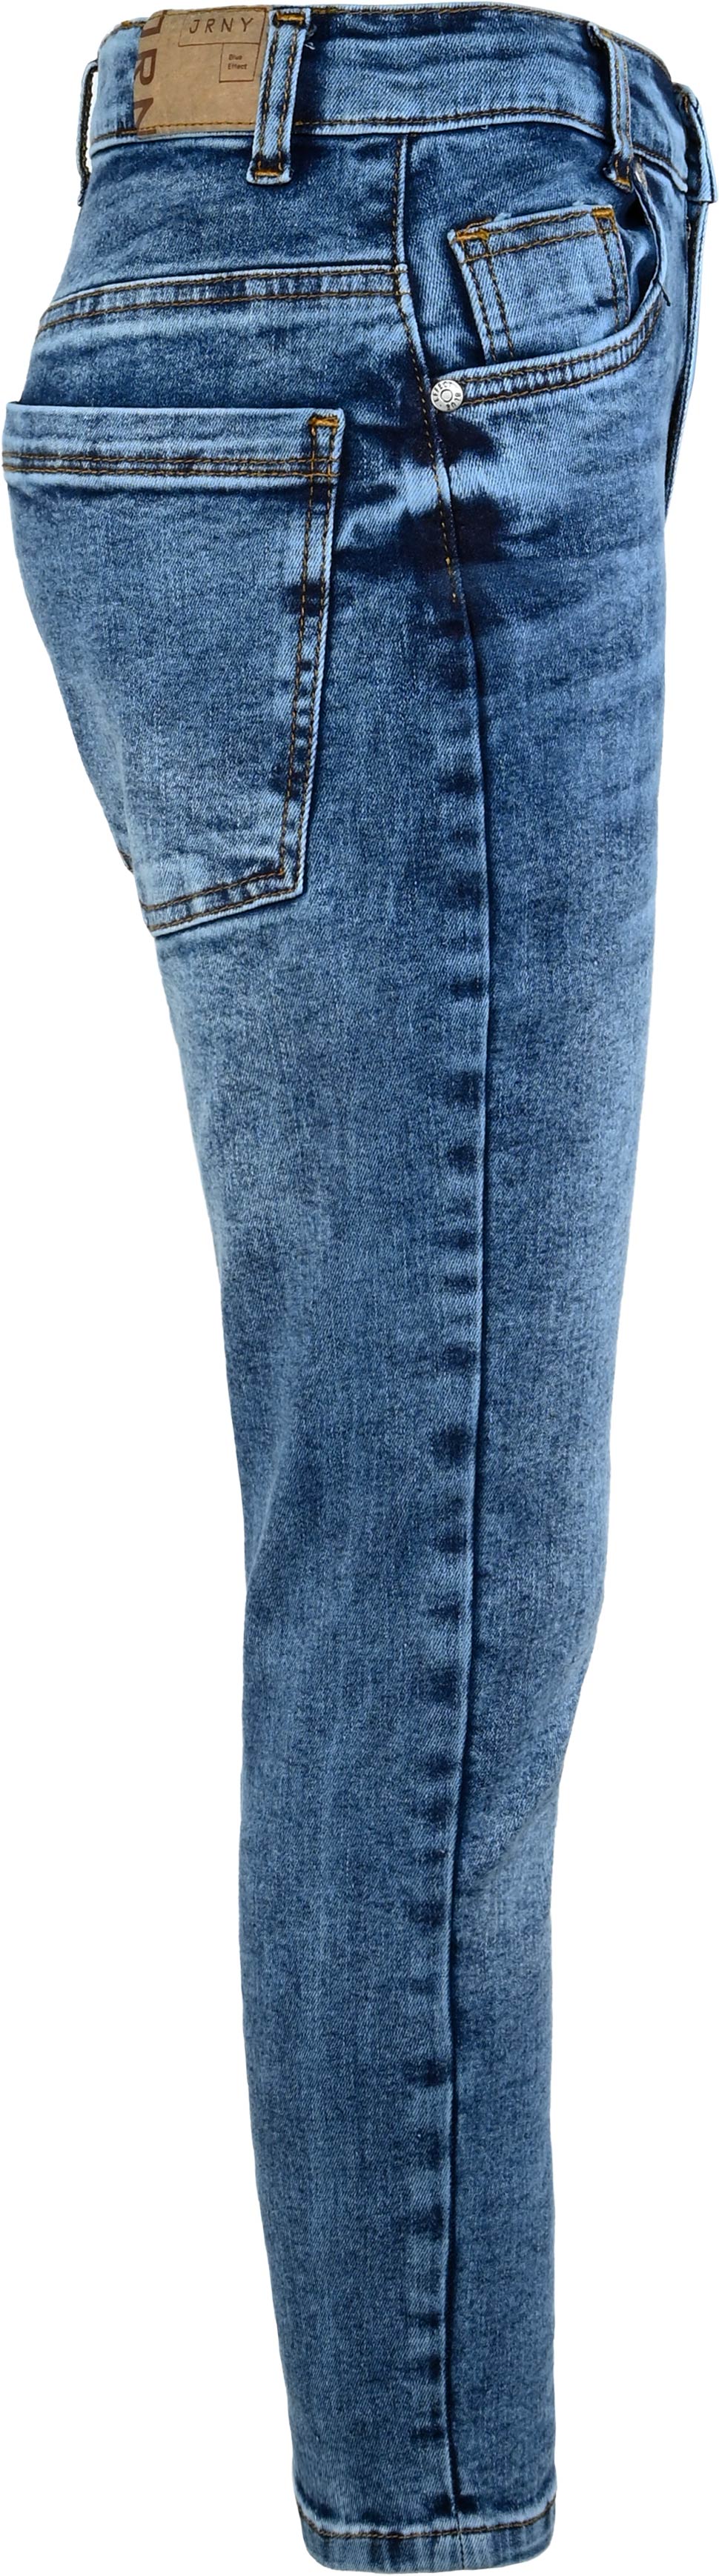 2900-JRNY Loose Fit Jeans Boys, verfügbar in Normal